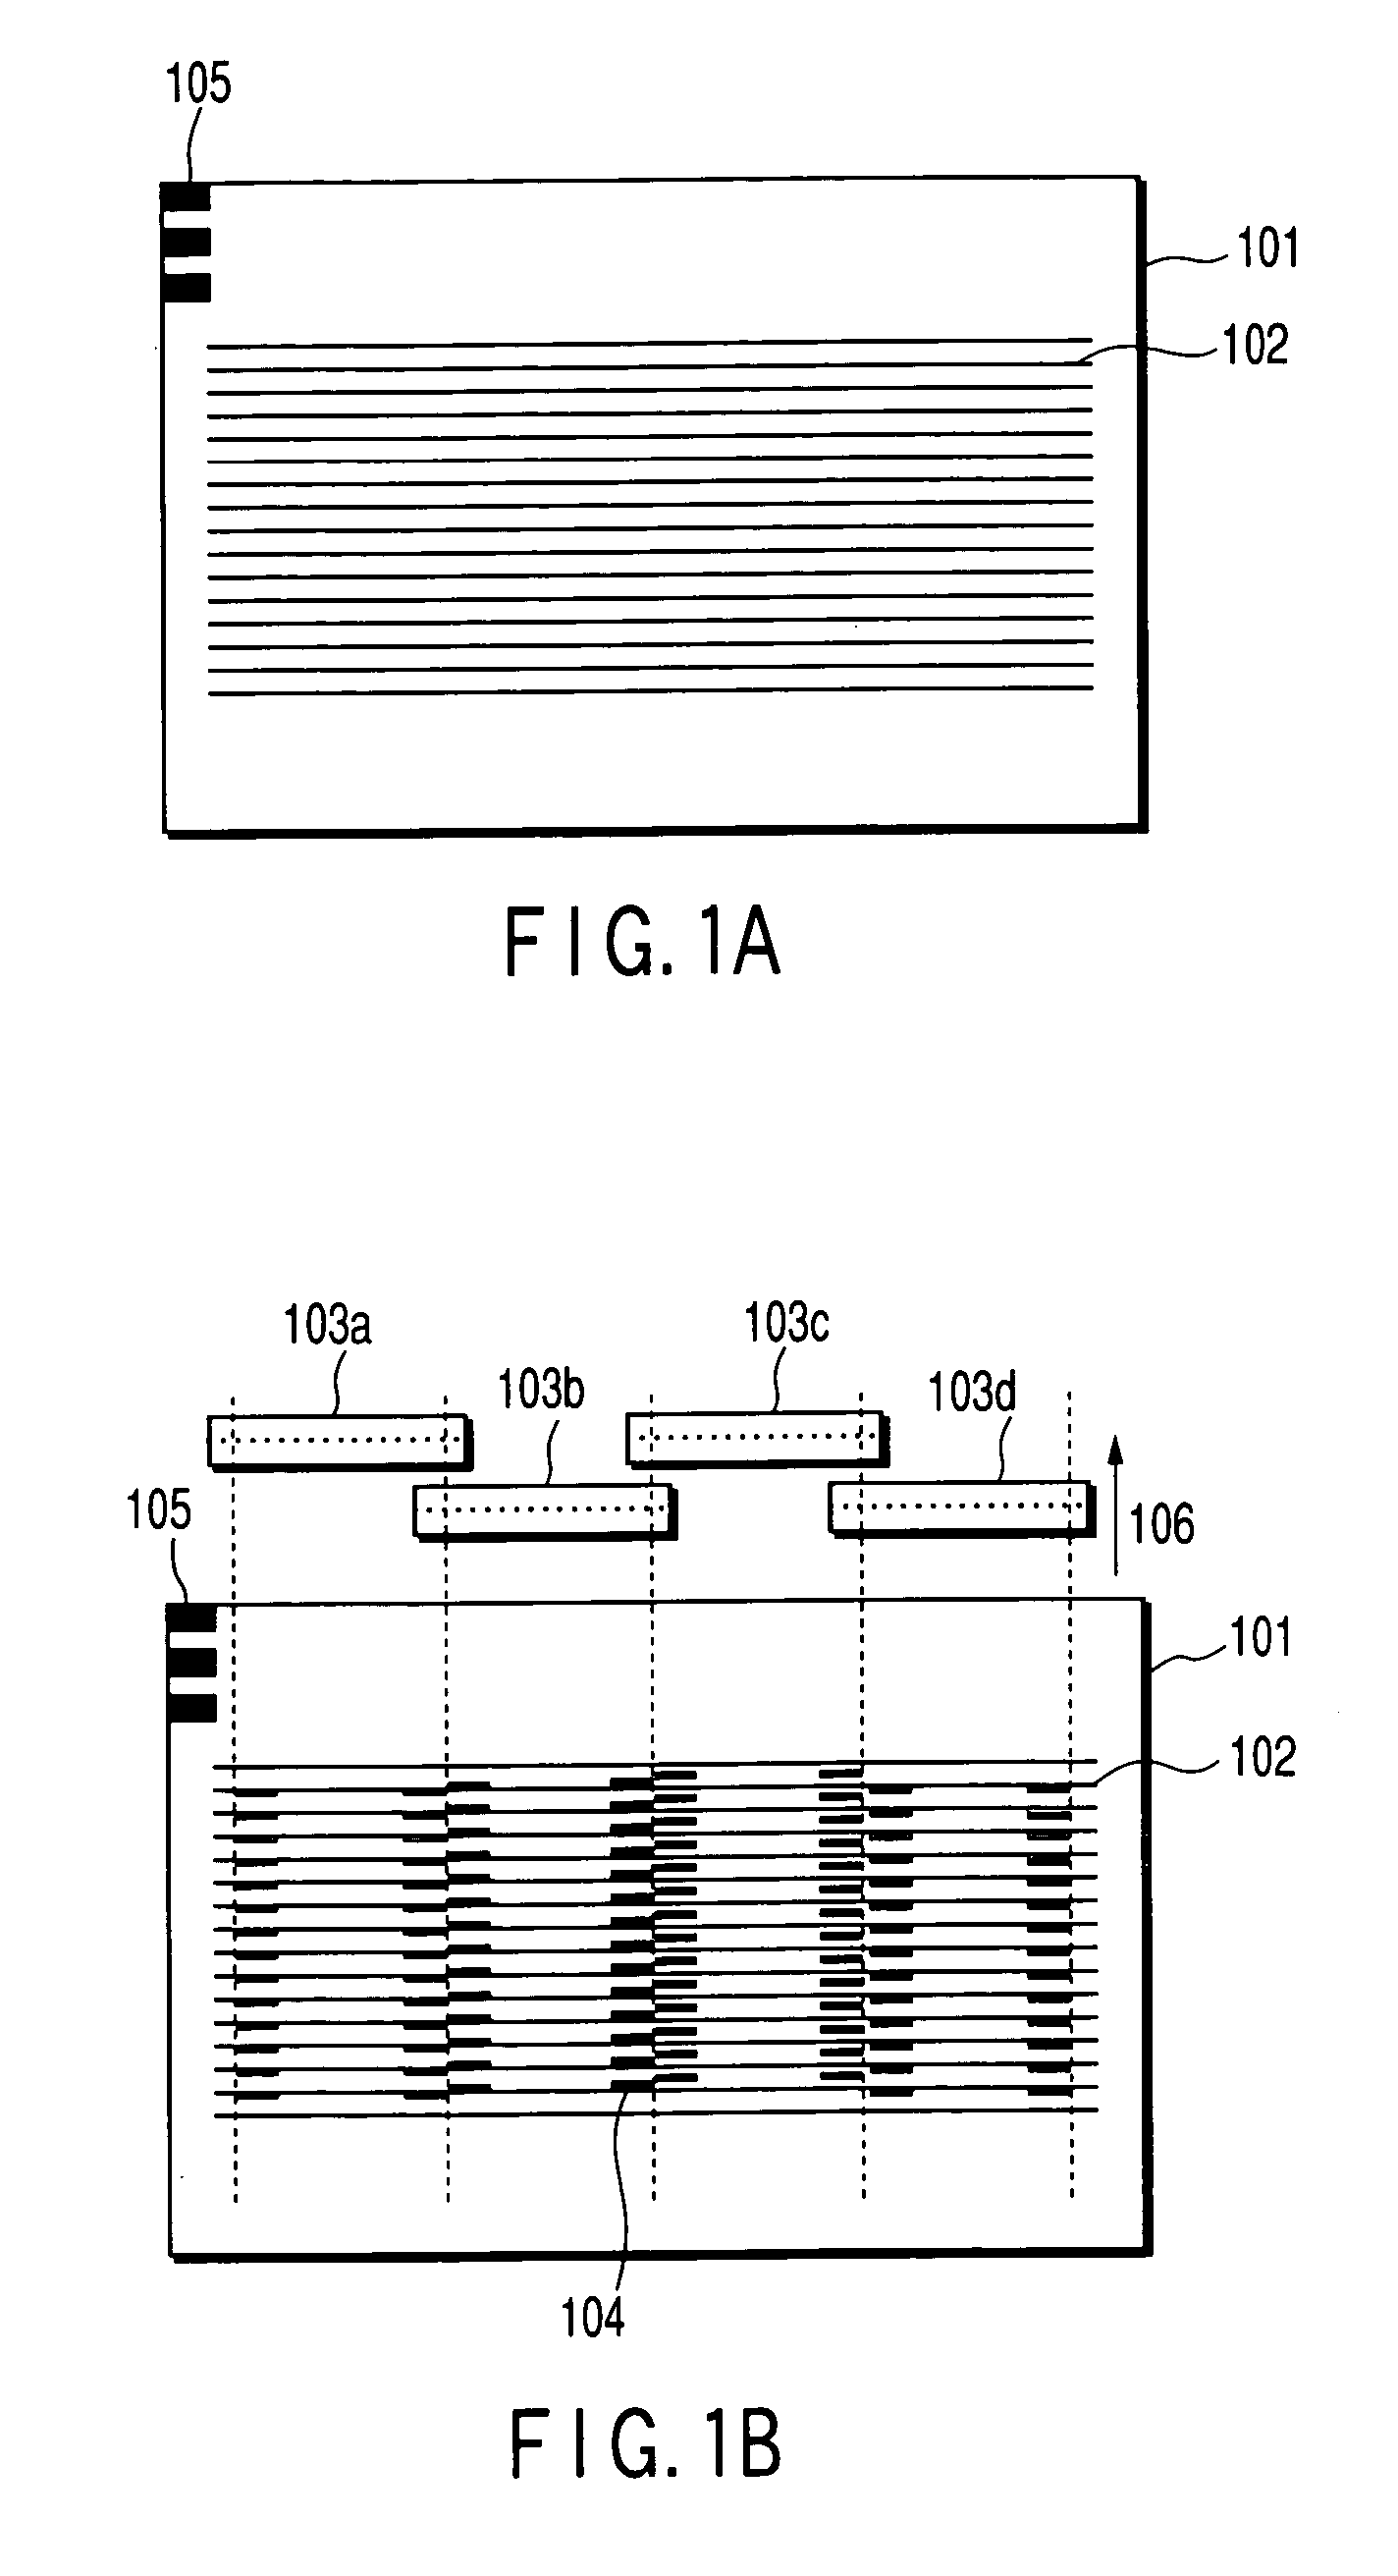 Recording sheet and image recording apparatus